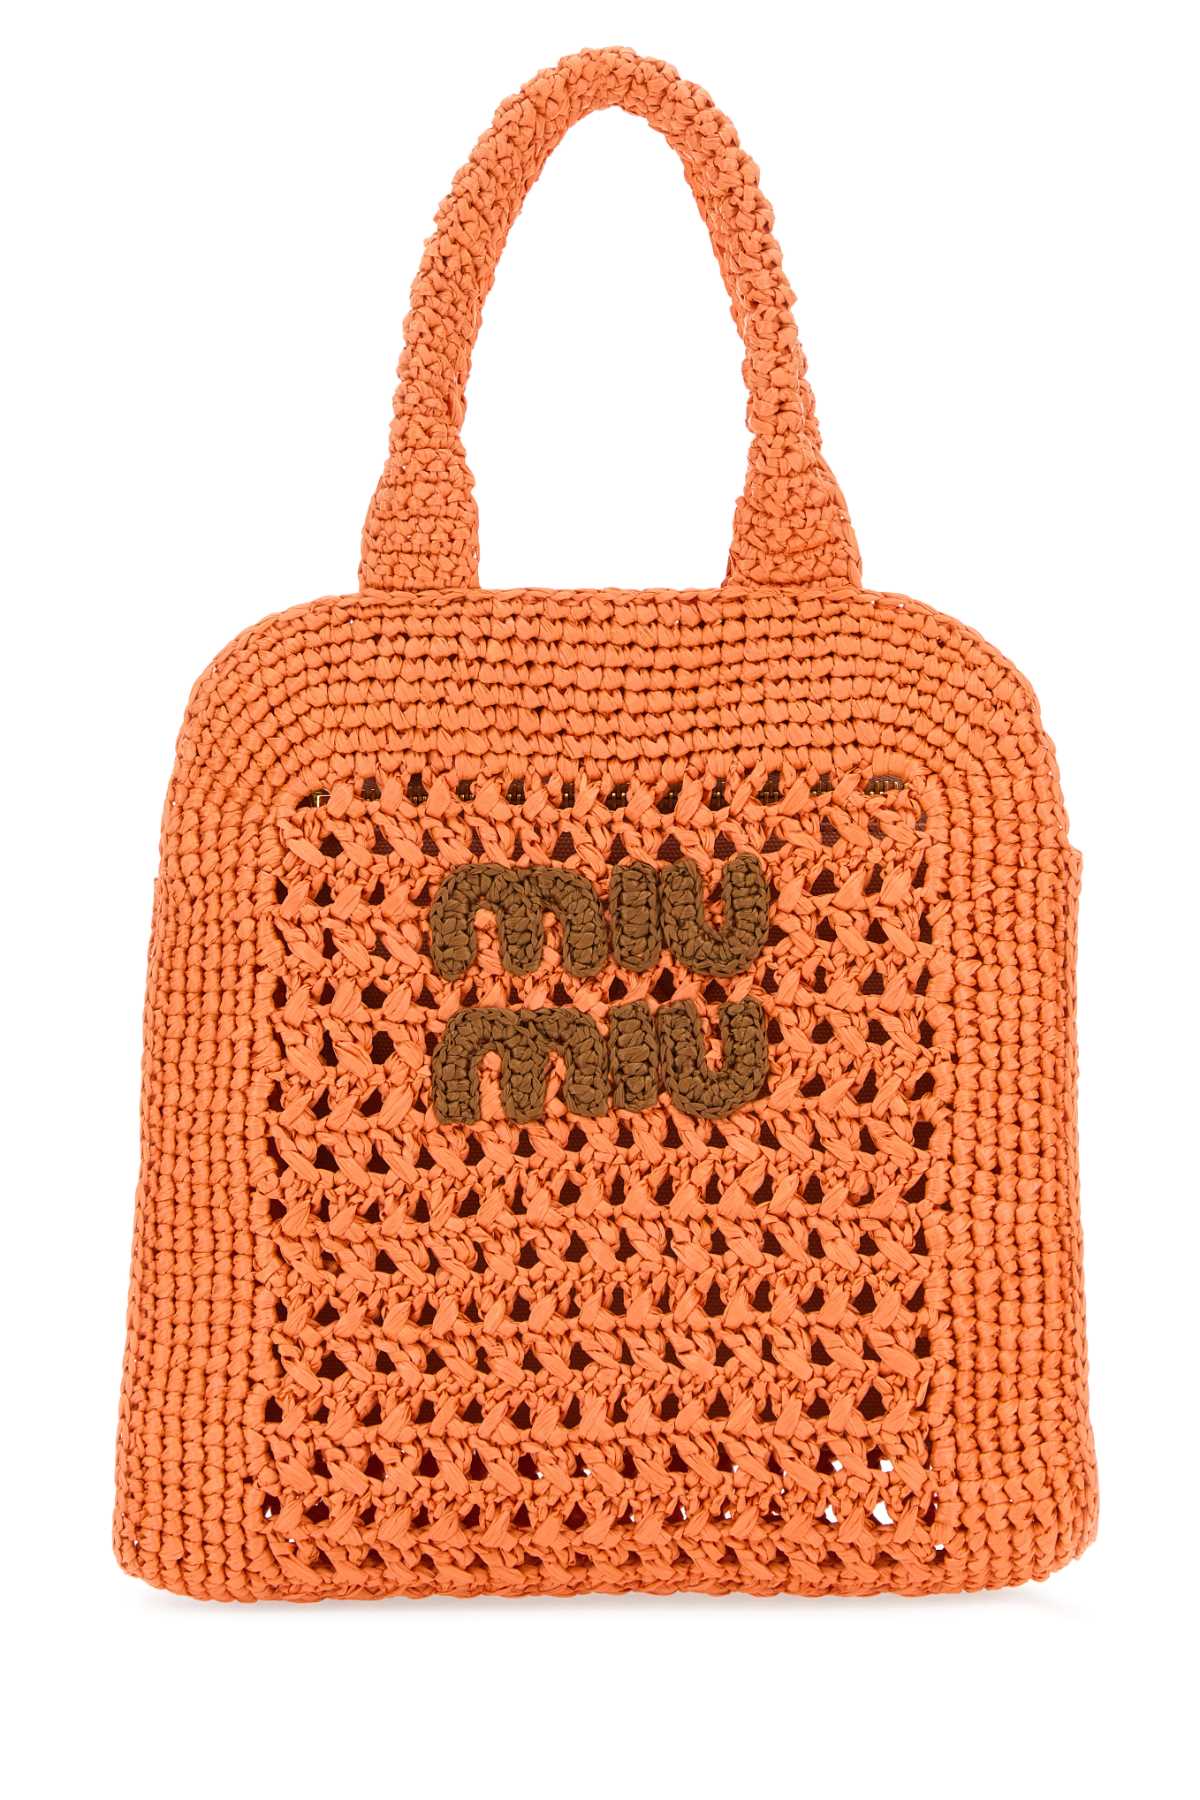 Orange Crochet Handbag